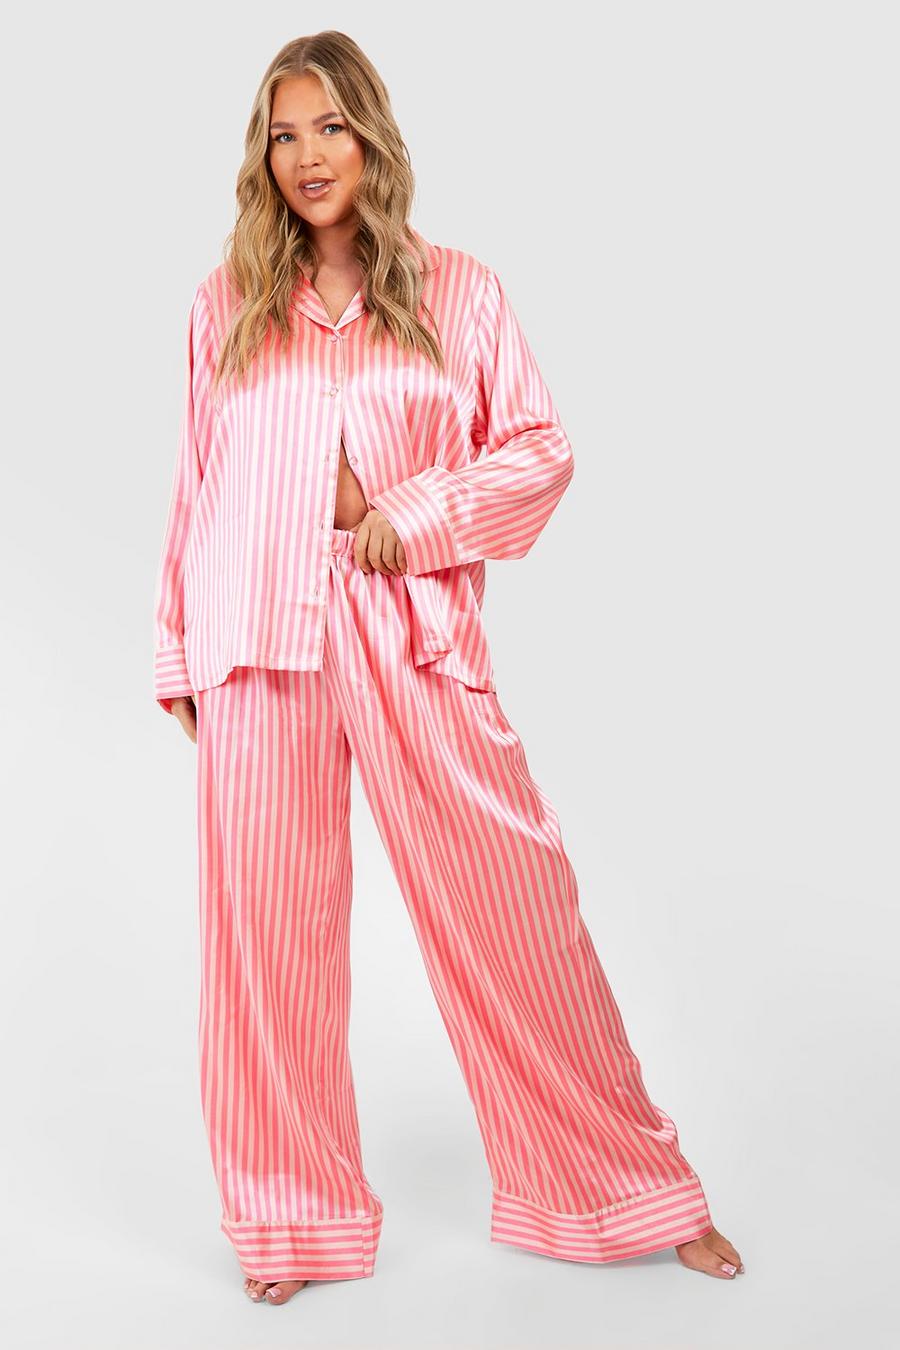 Plus Satin Pyjama-Set mit Streifen, Candy pink